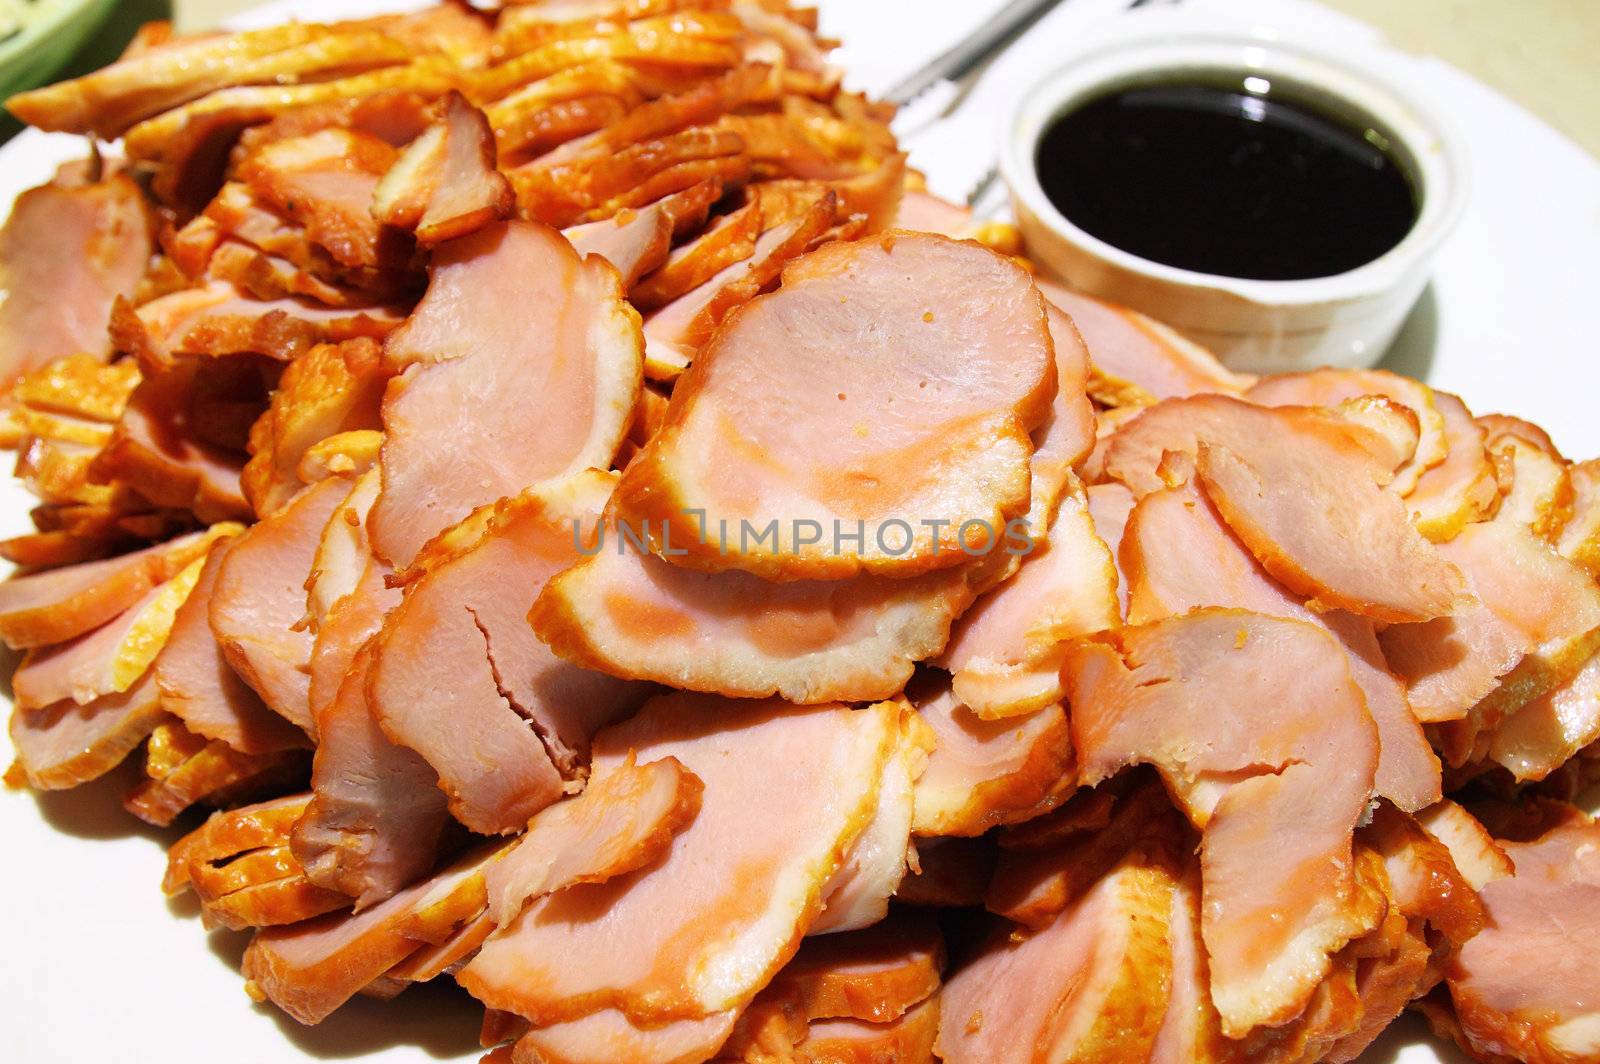 Slices of pork bacon by geargodz